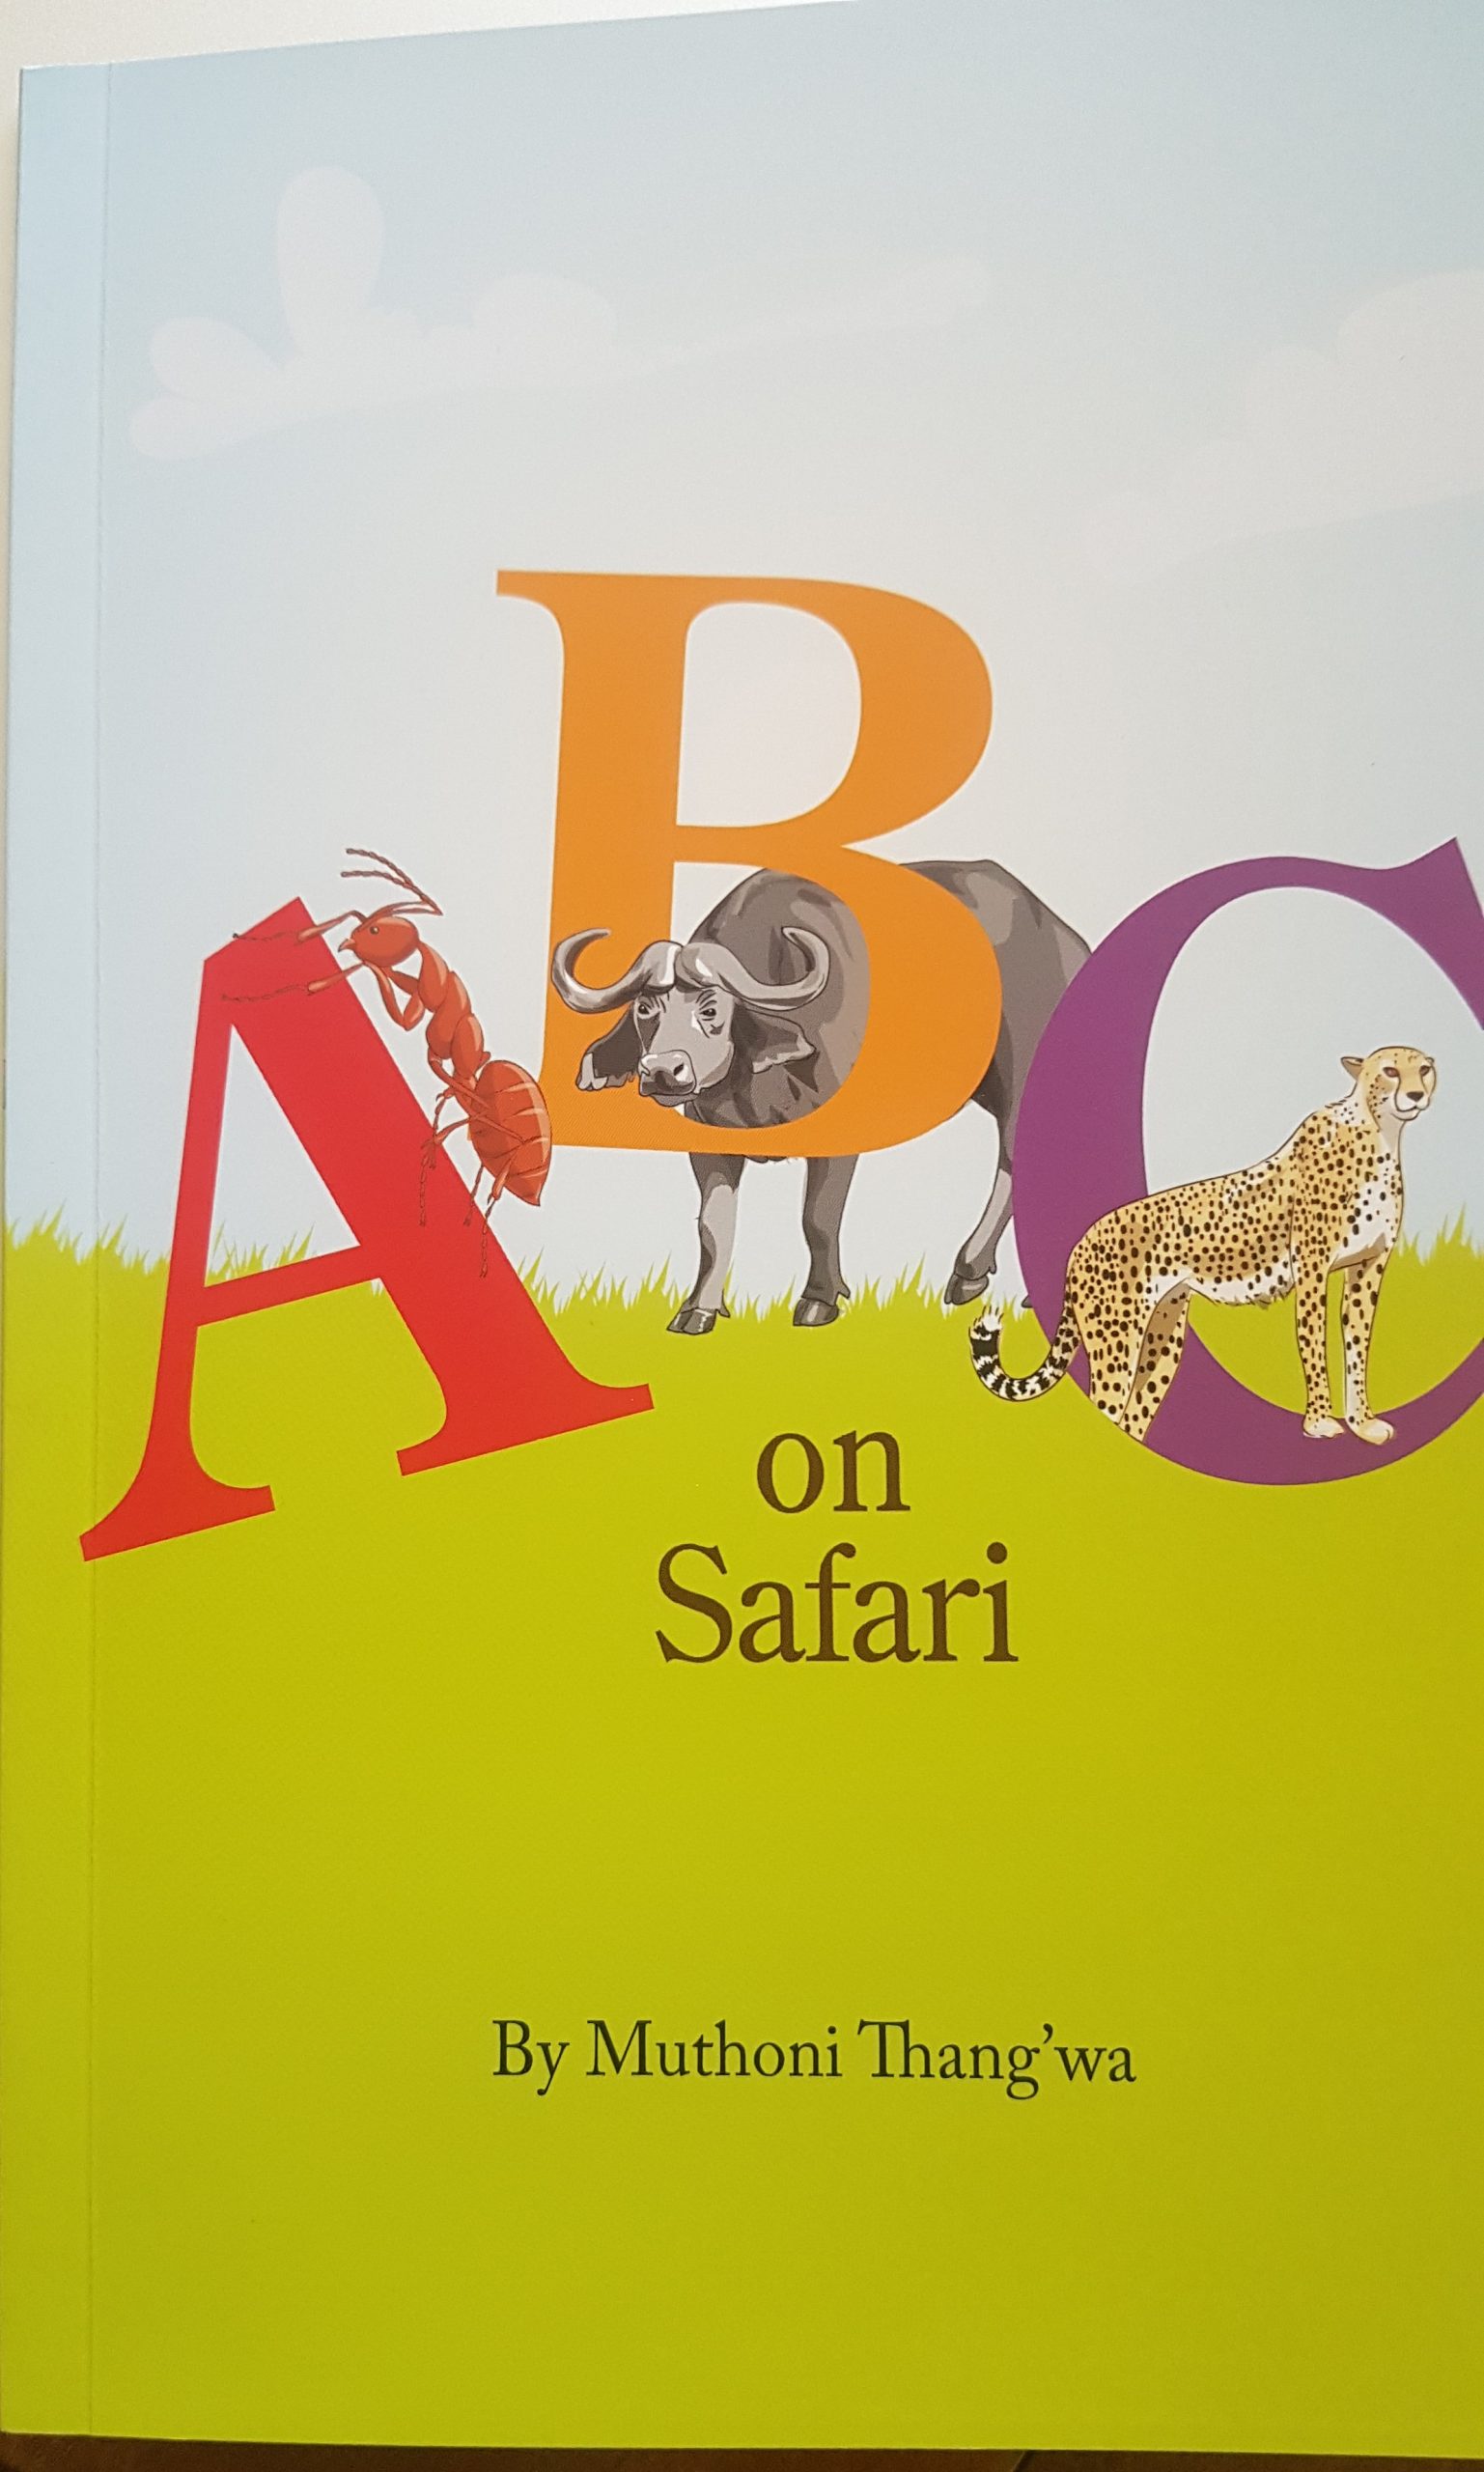 Illustrations custom made for ABC on Safari